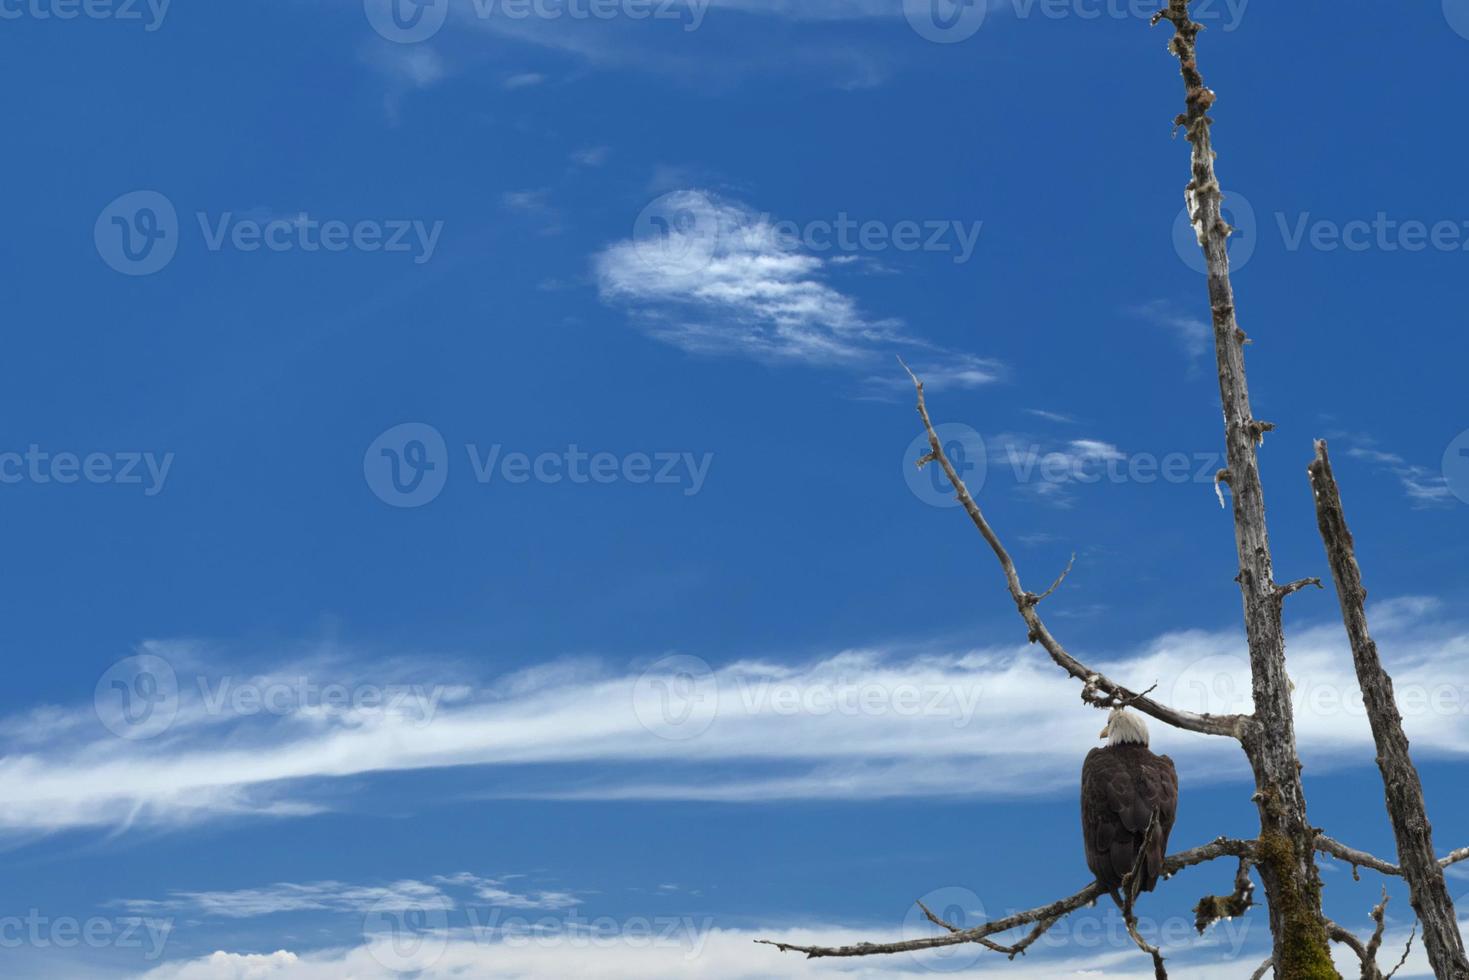 skallig Örn isolerat på djup blå himmel bakgrund foto